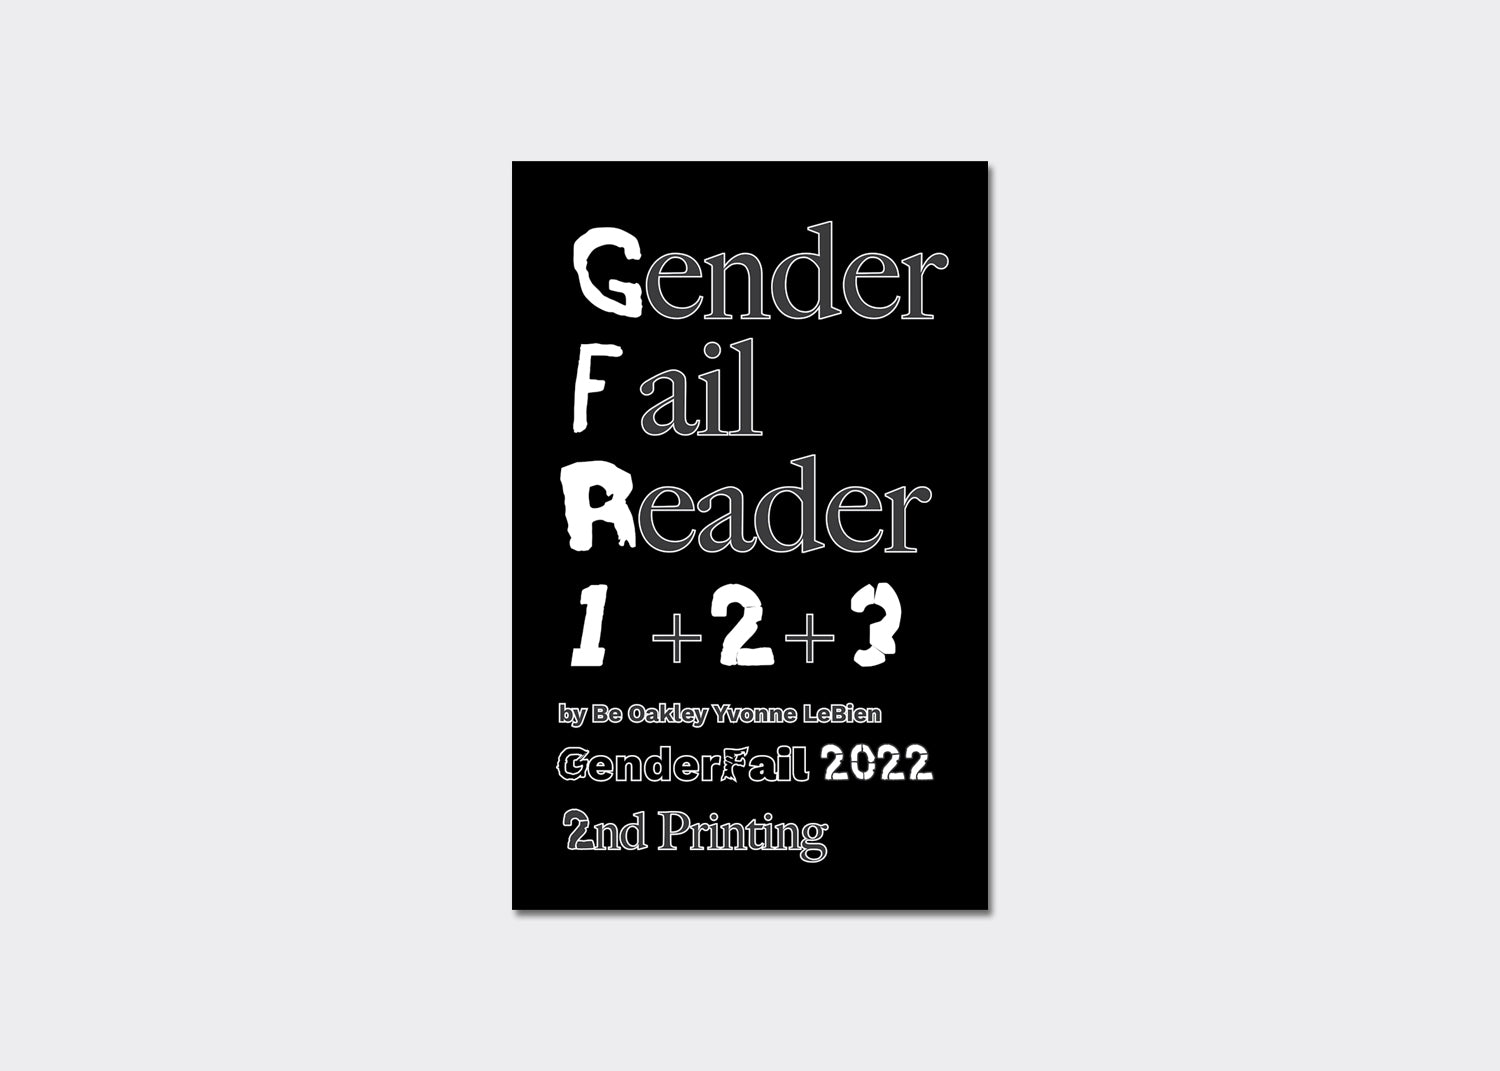 The GenderFail Reader 1 + 2 + 3